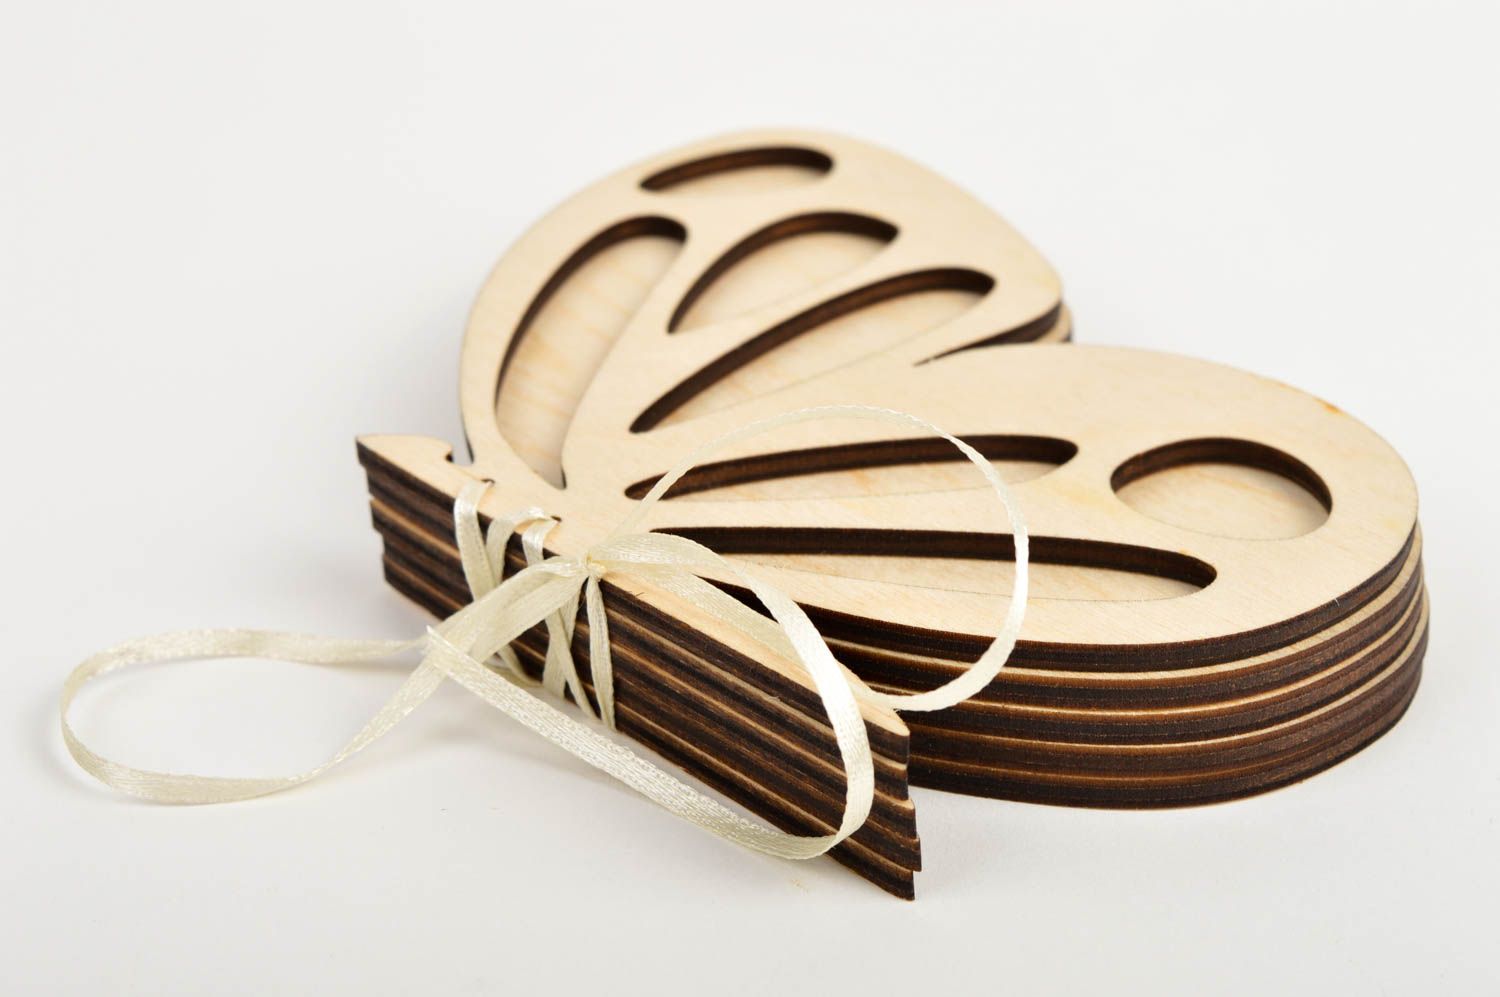 Unusual handmade wooden blank art materials art and craft supplies gift ideas photo 5